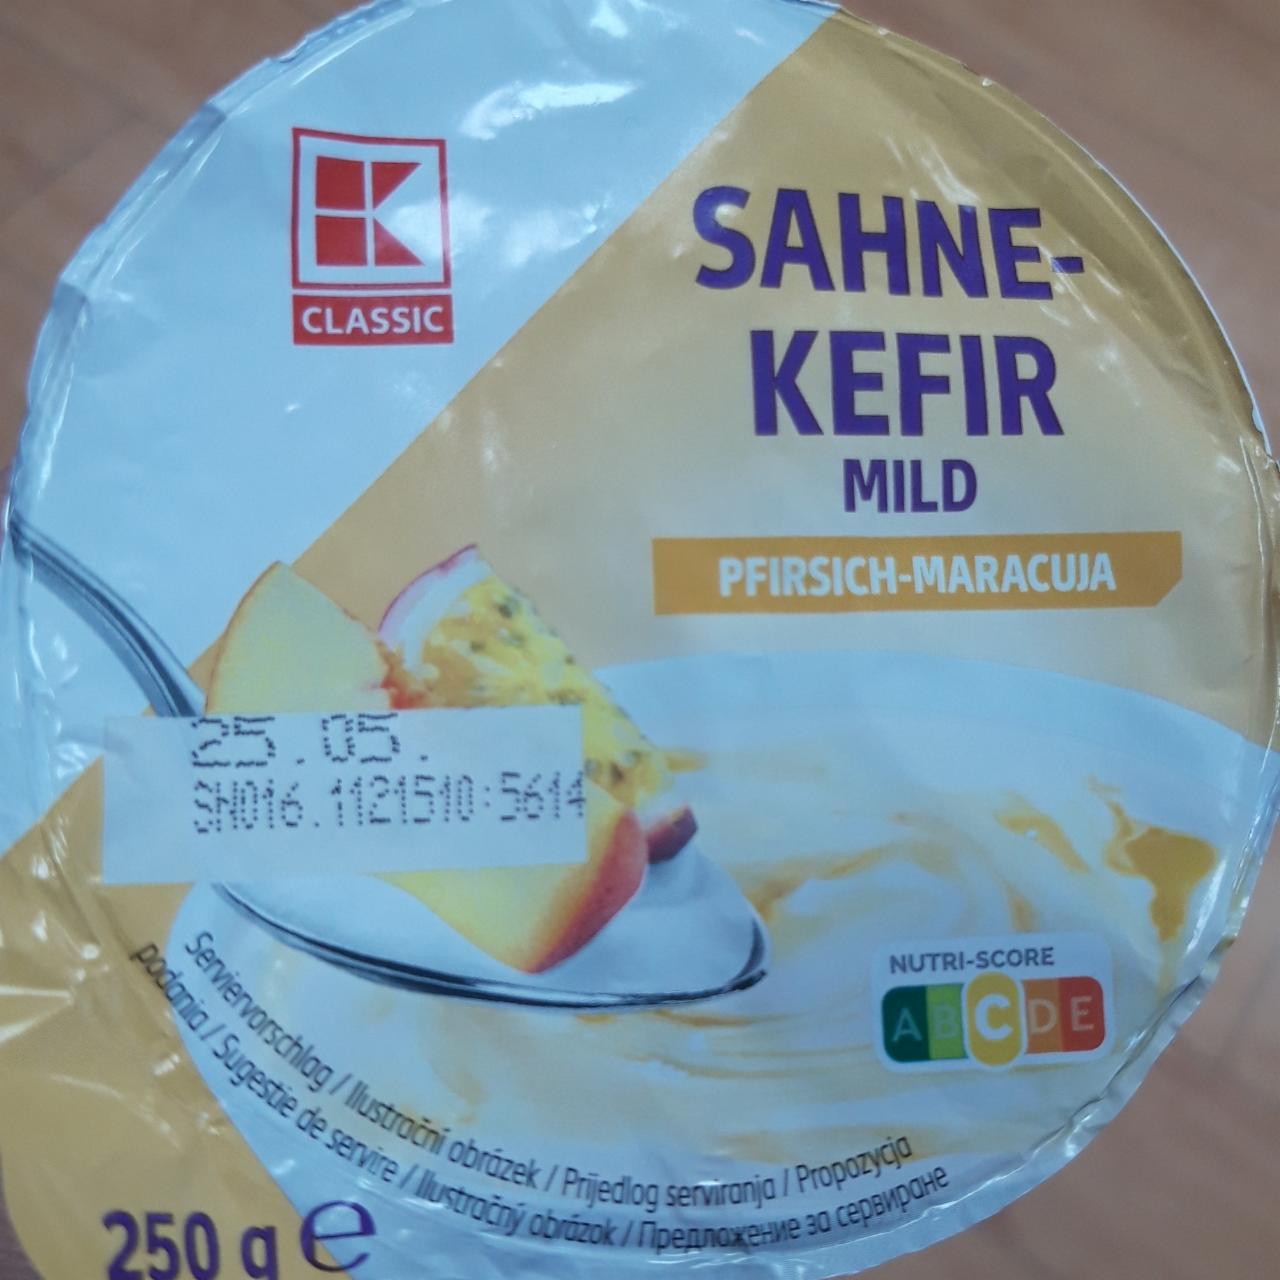 Fotografie - Sahne-kefir mild pfirsich-maracuja K-Classic